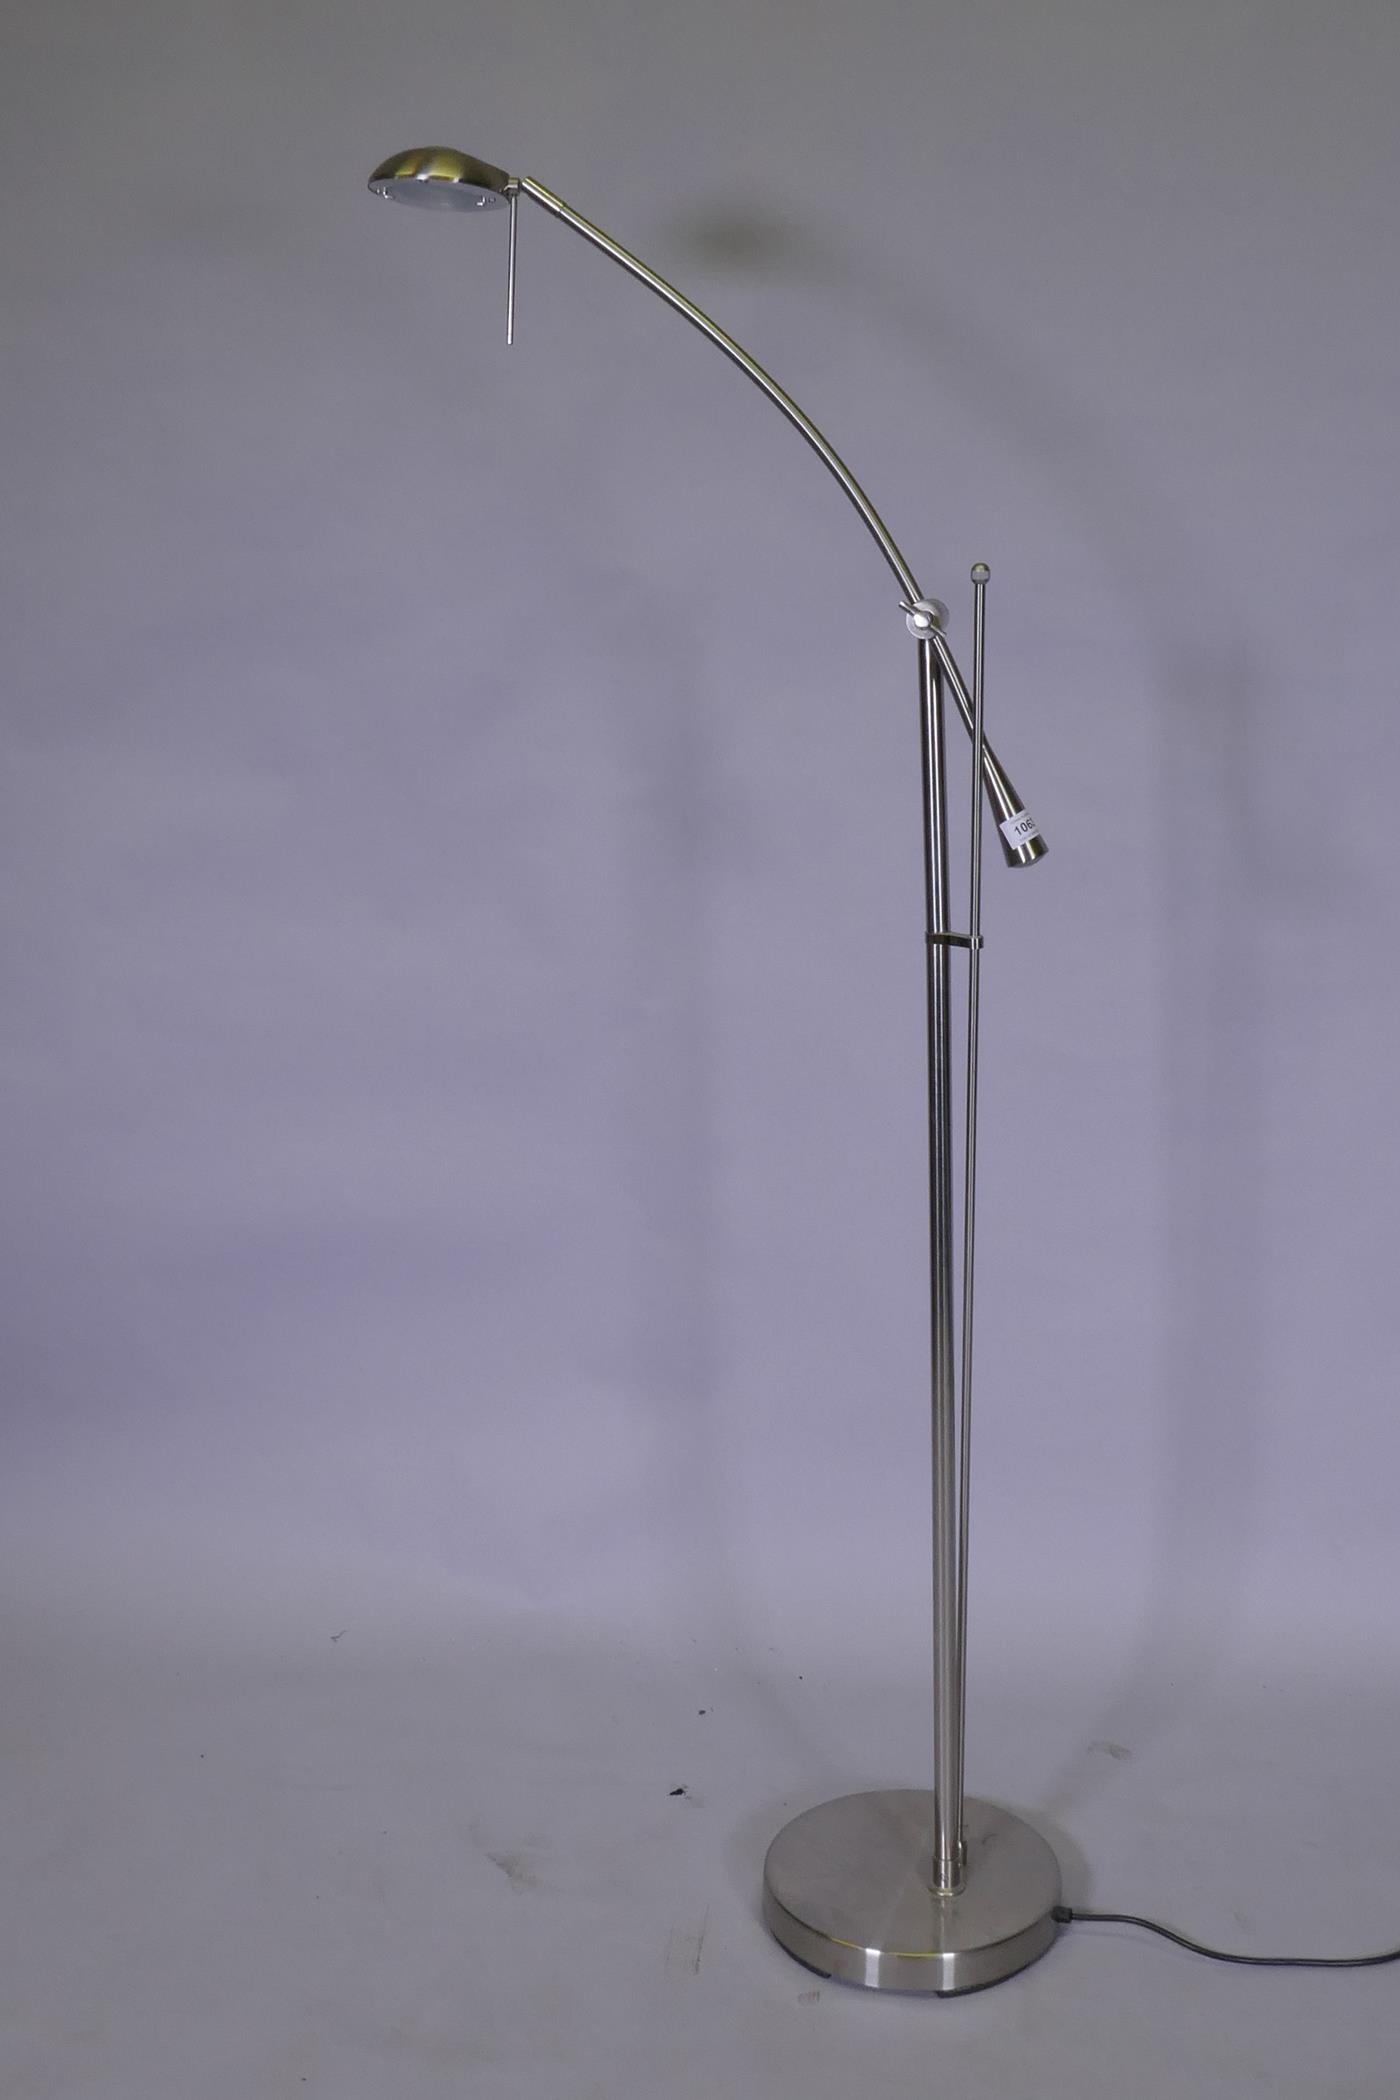 A brushed metal adjustable floor lamp, 145cm high